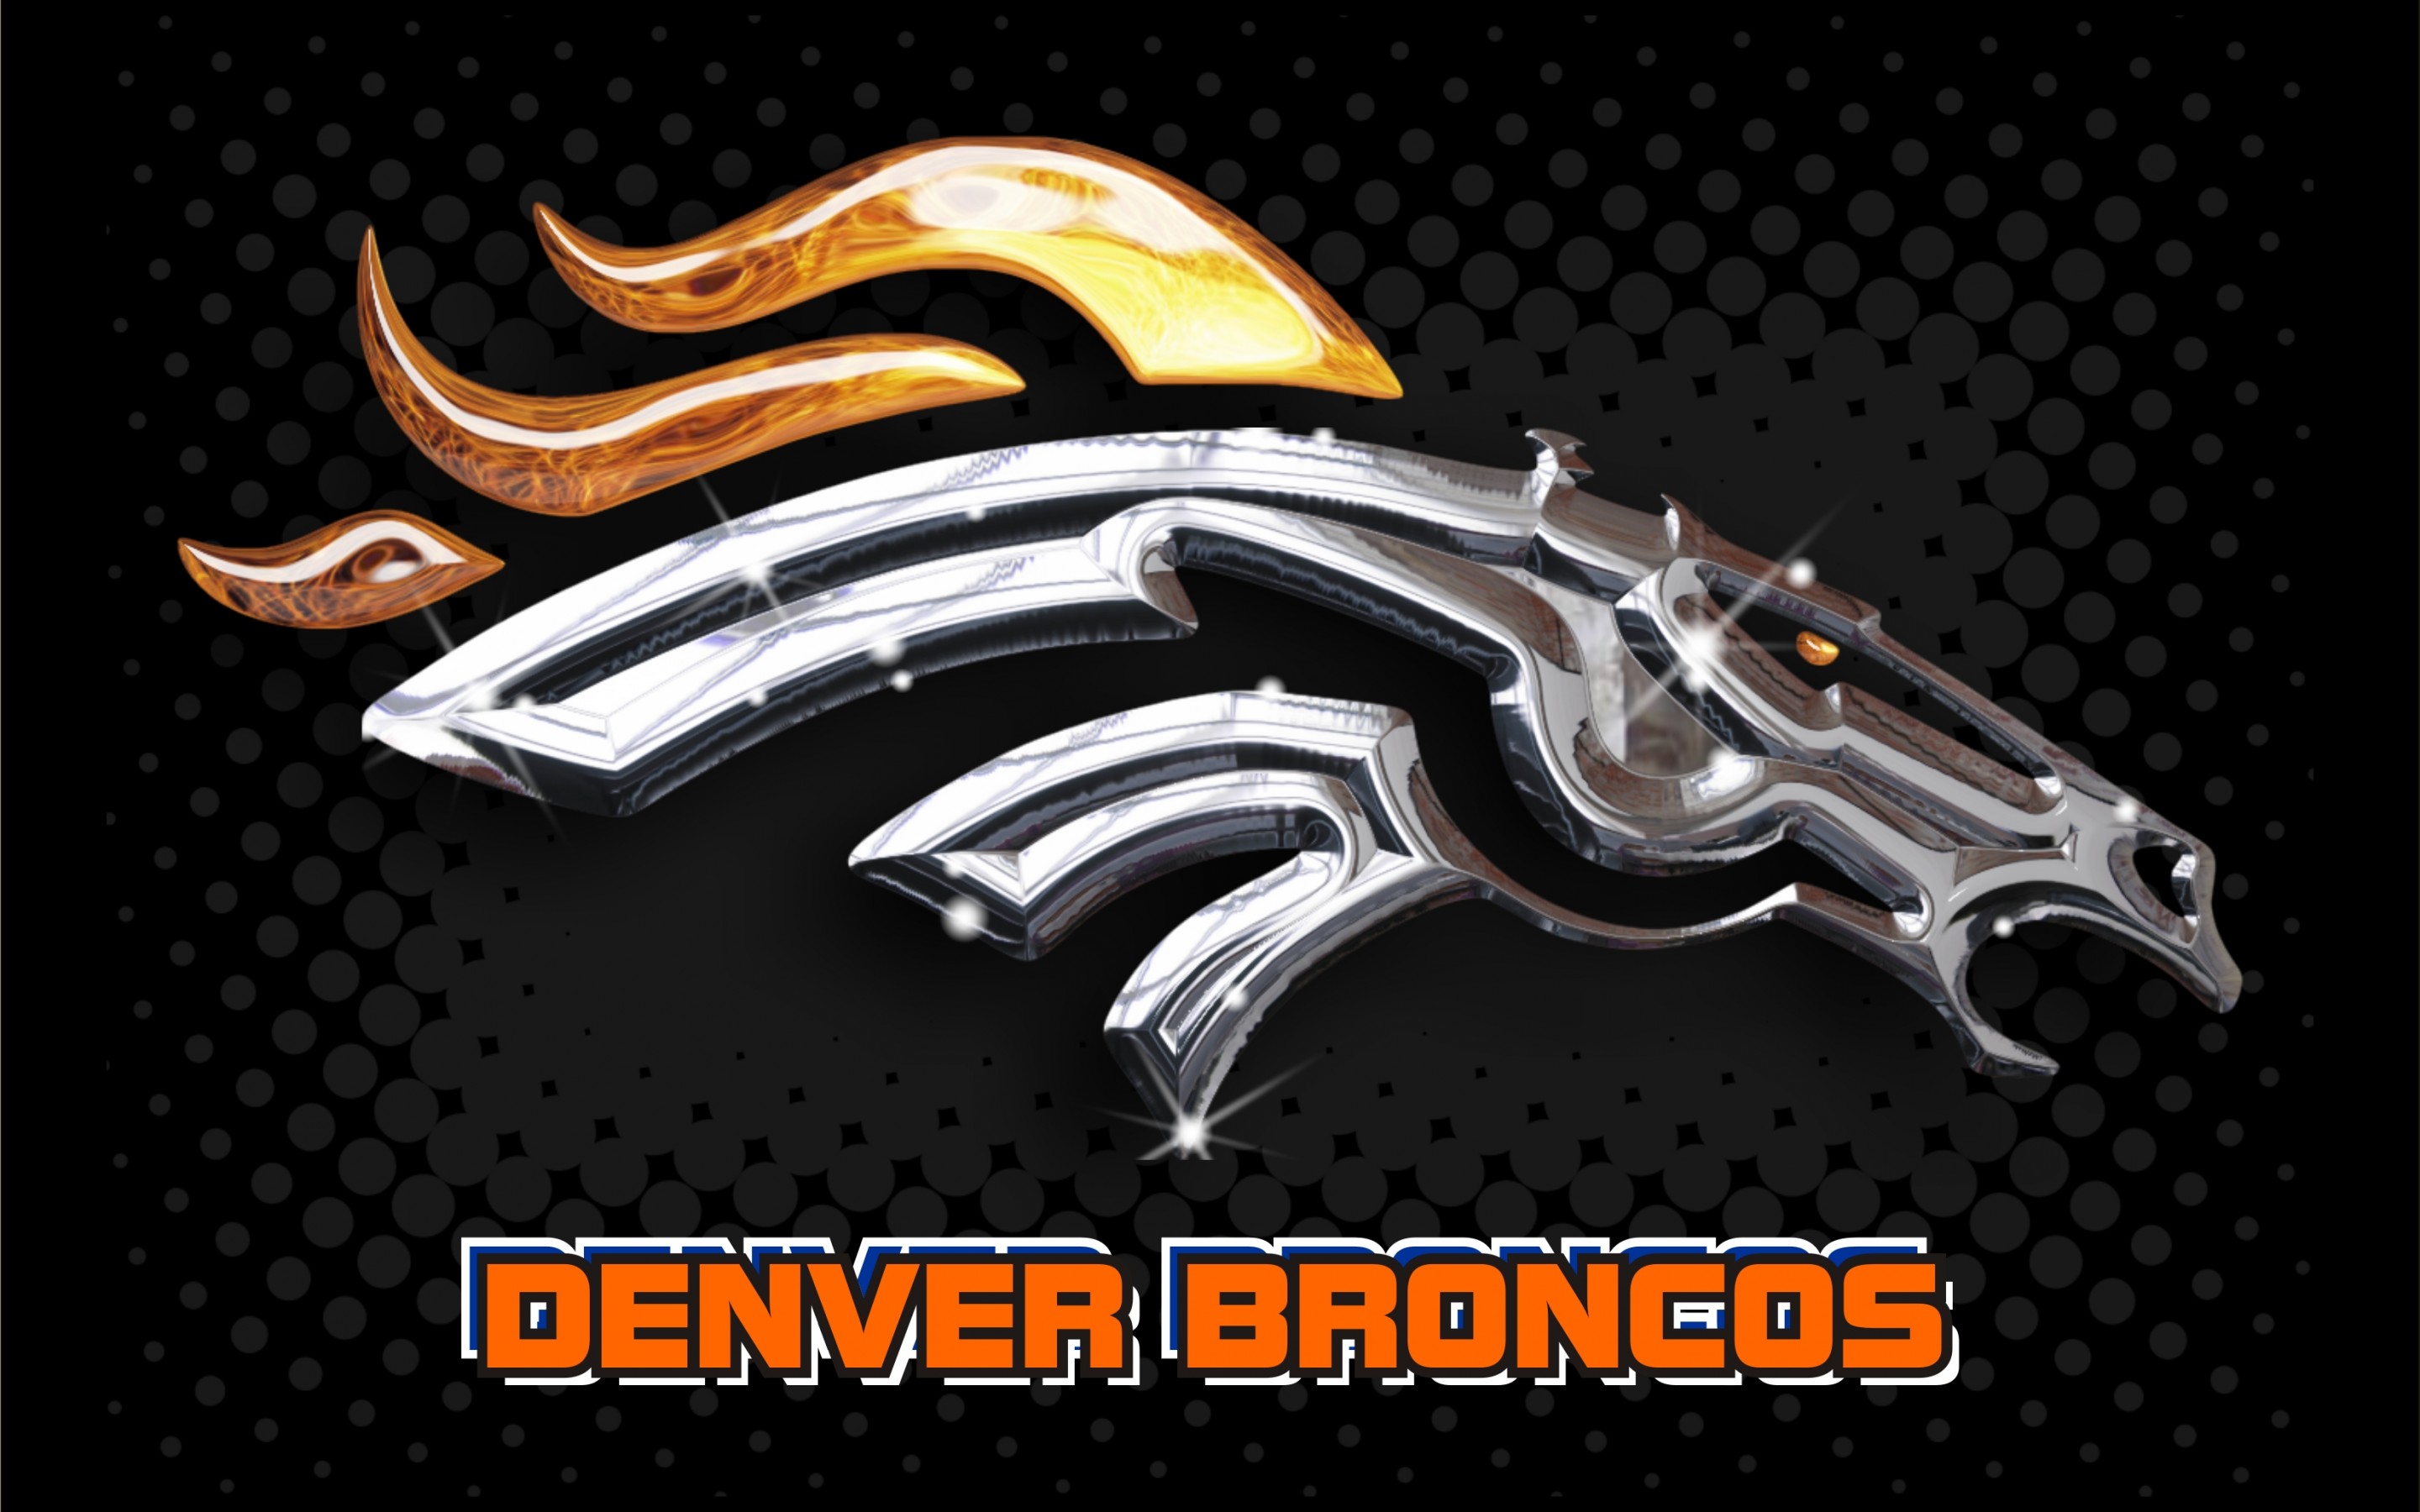 Denver Broncos Wide HD Football Team Logo Wallpaper Click Thumbnail